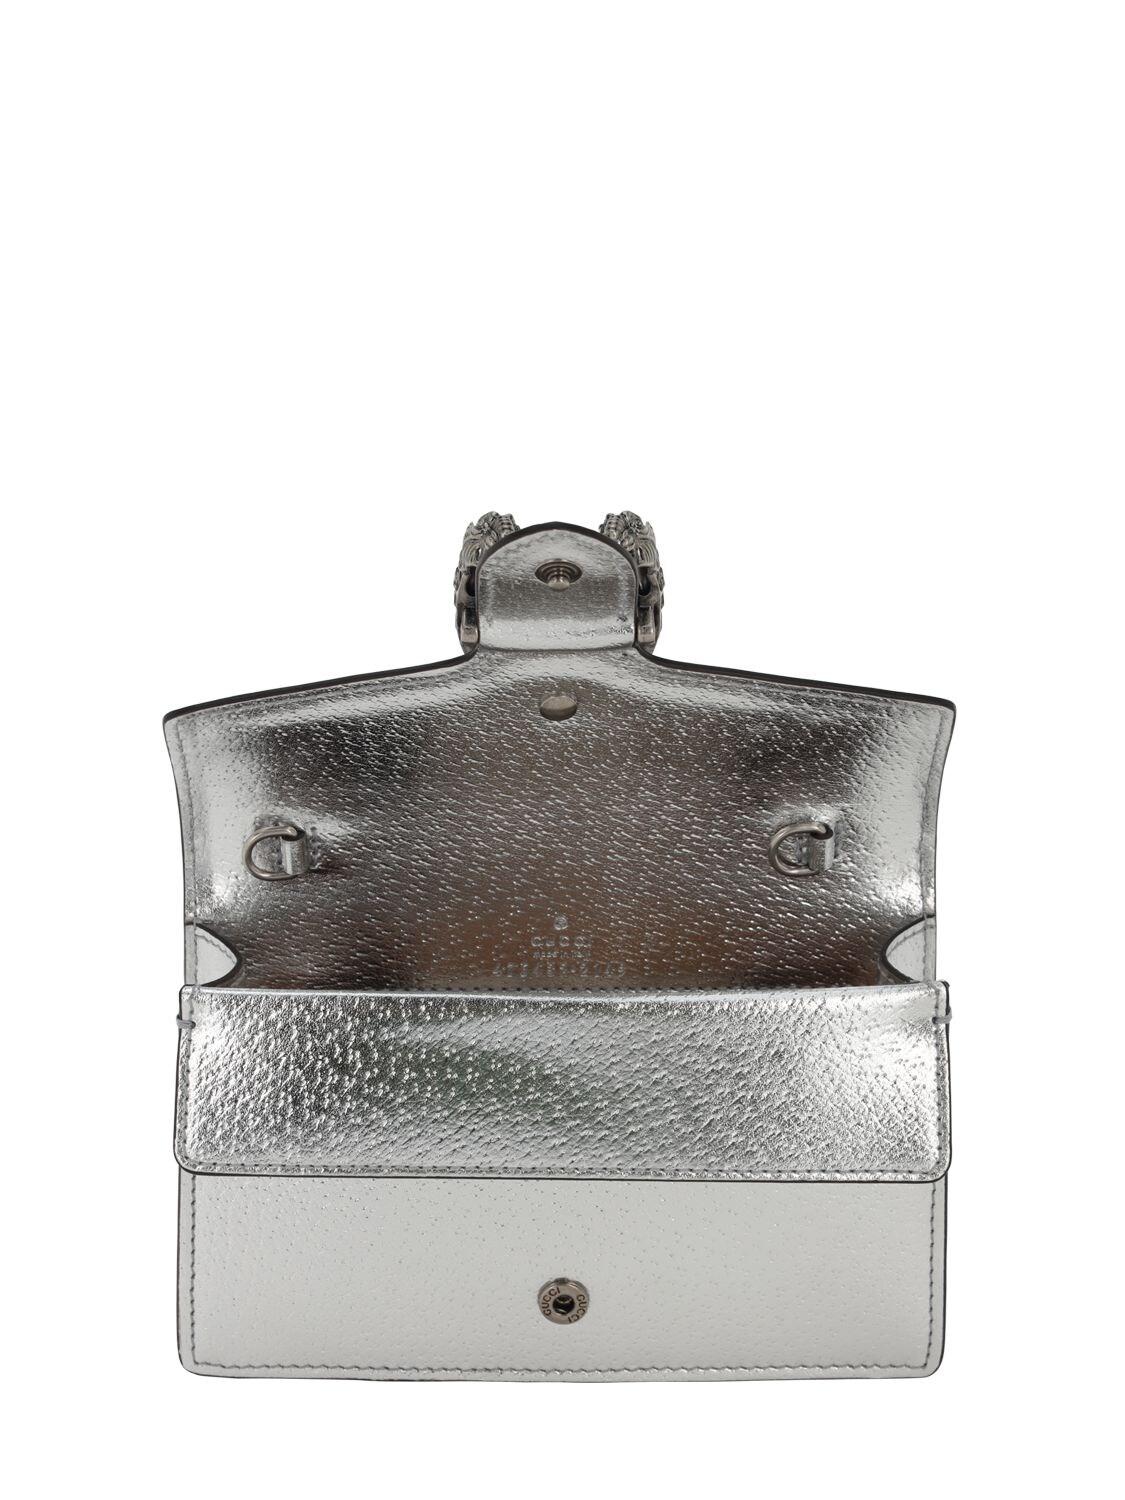 Gucci Dionysus Super Mini Bag in Silver Leather — UFO No More